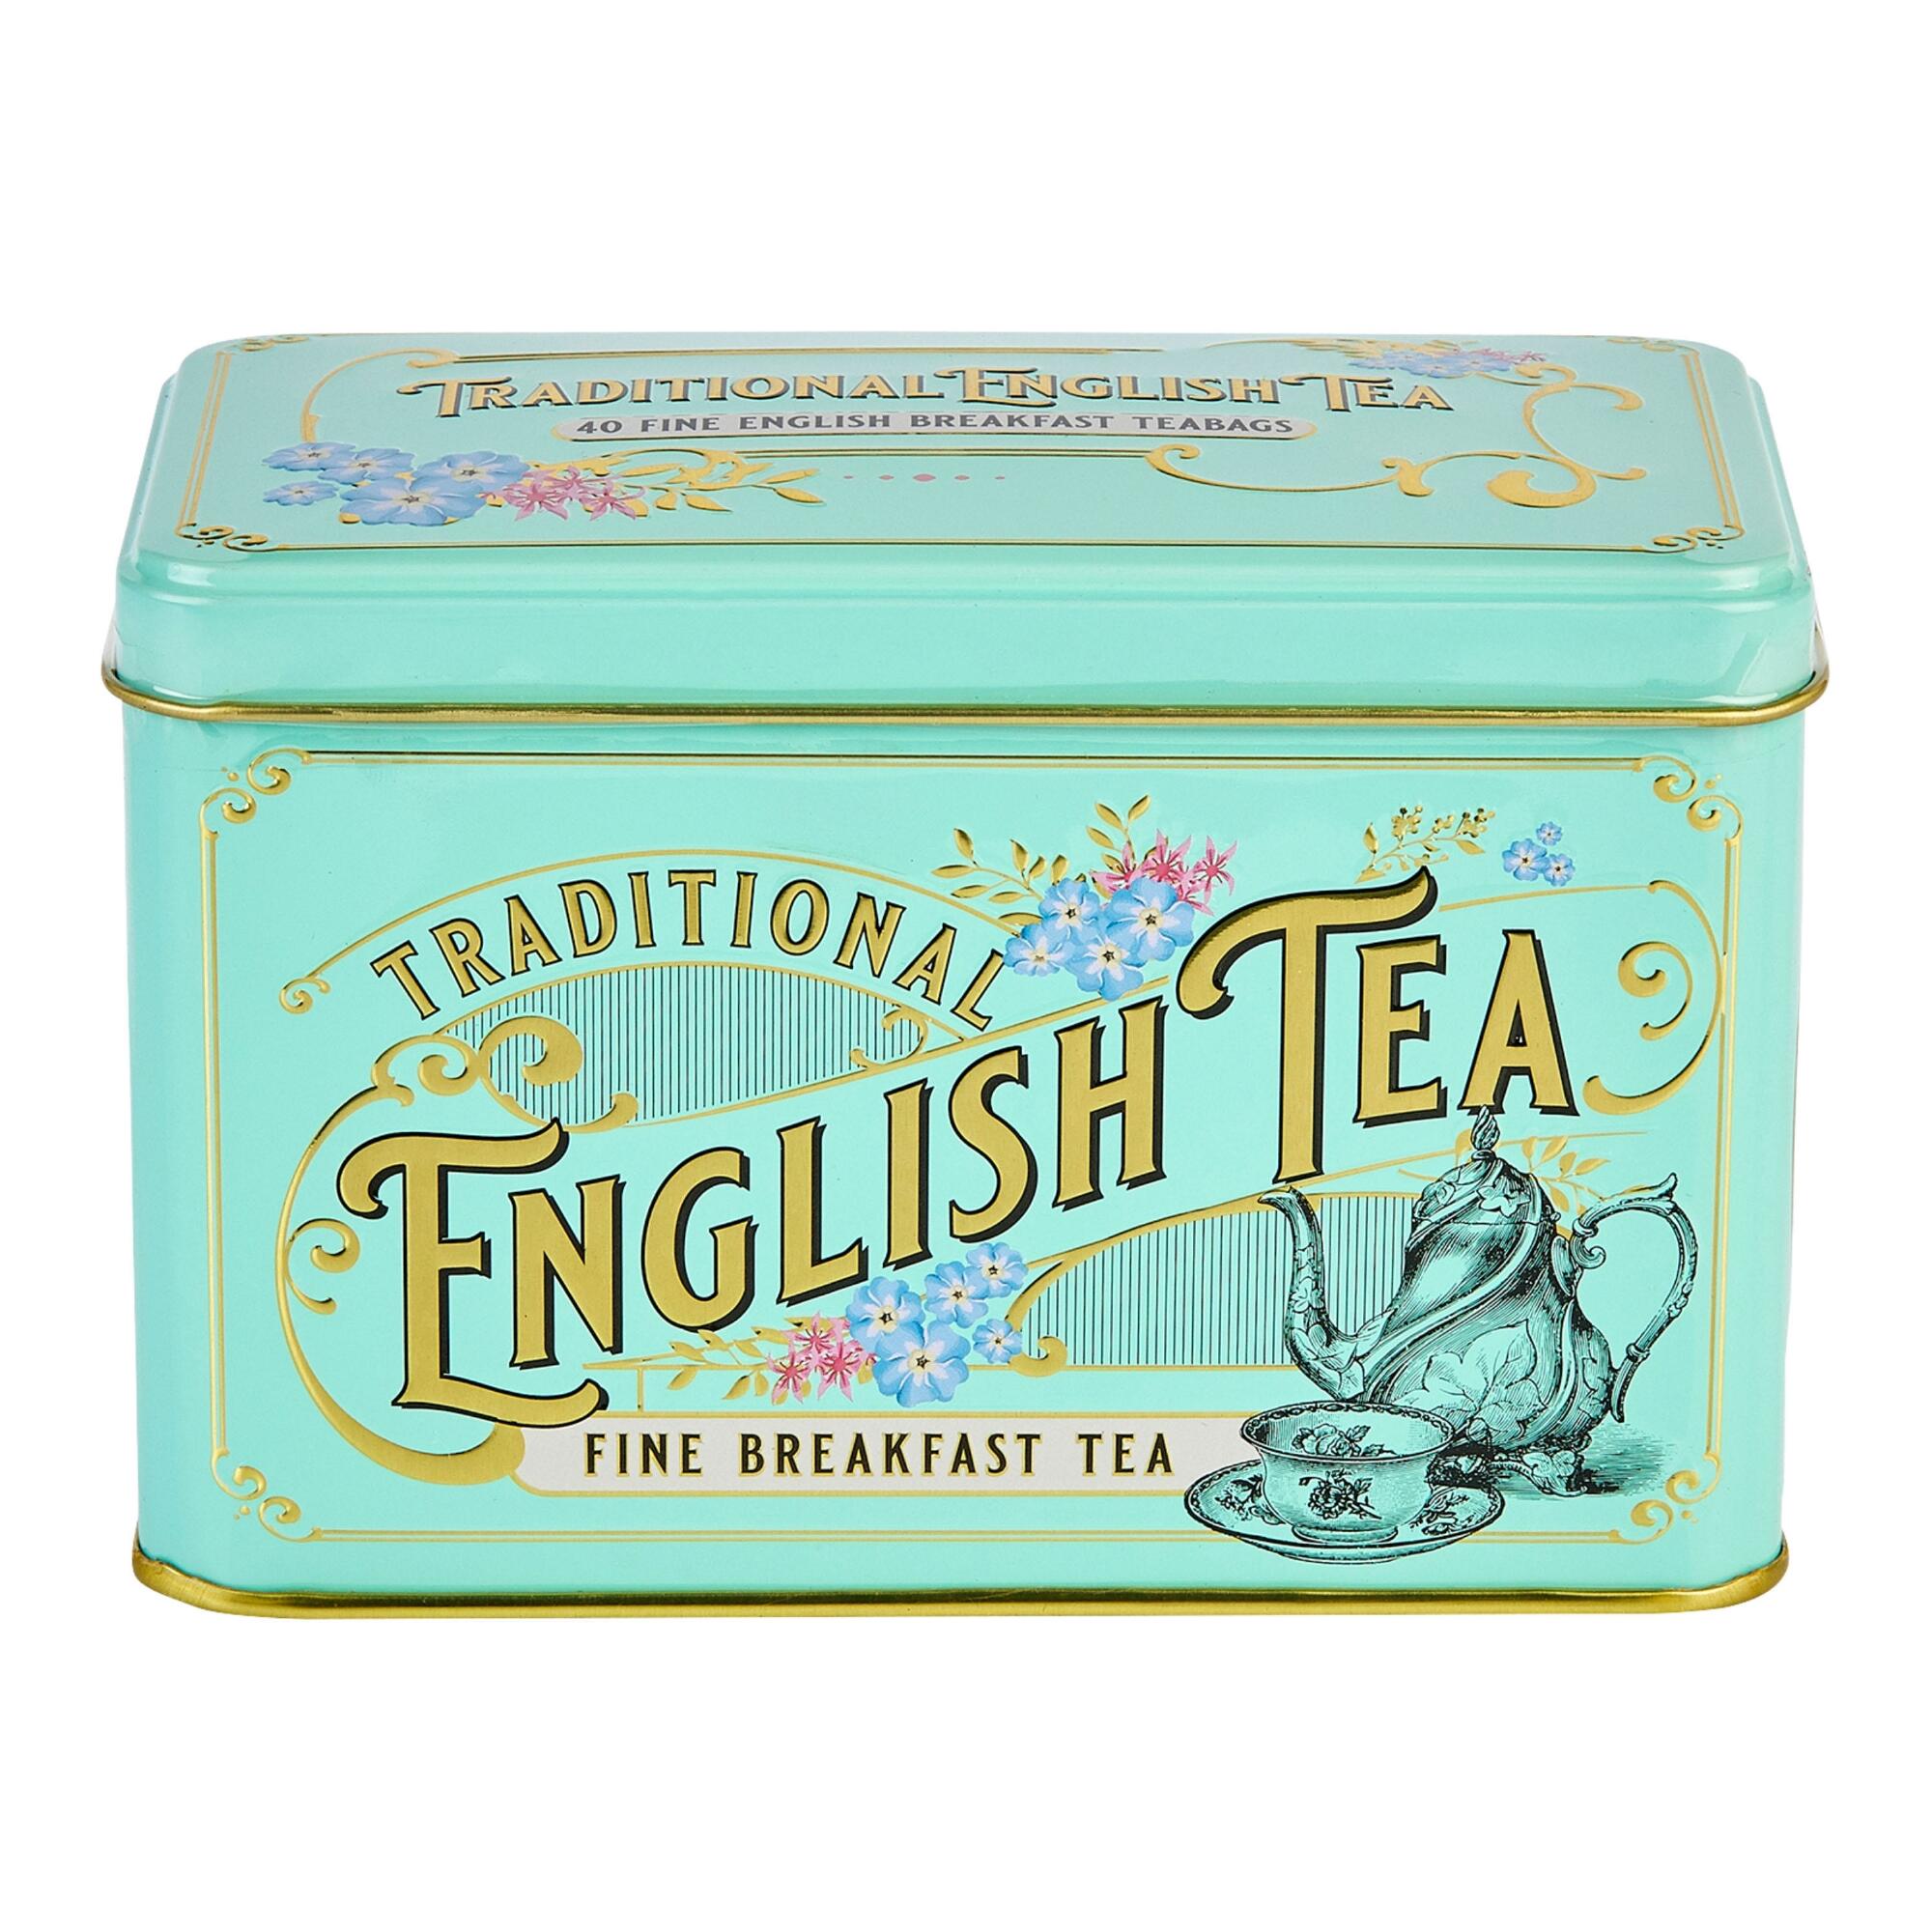 New English Teas Vintage English Breakfast Tea Tin 40 Count by World Market